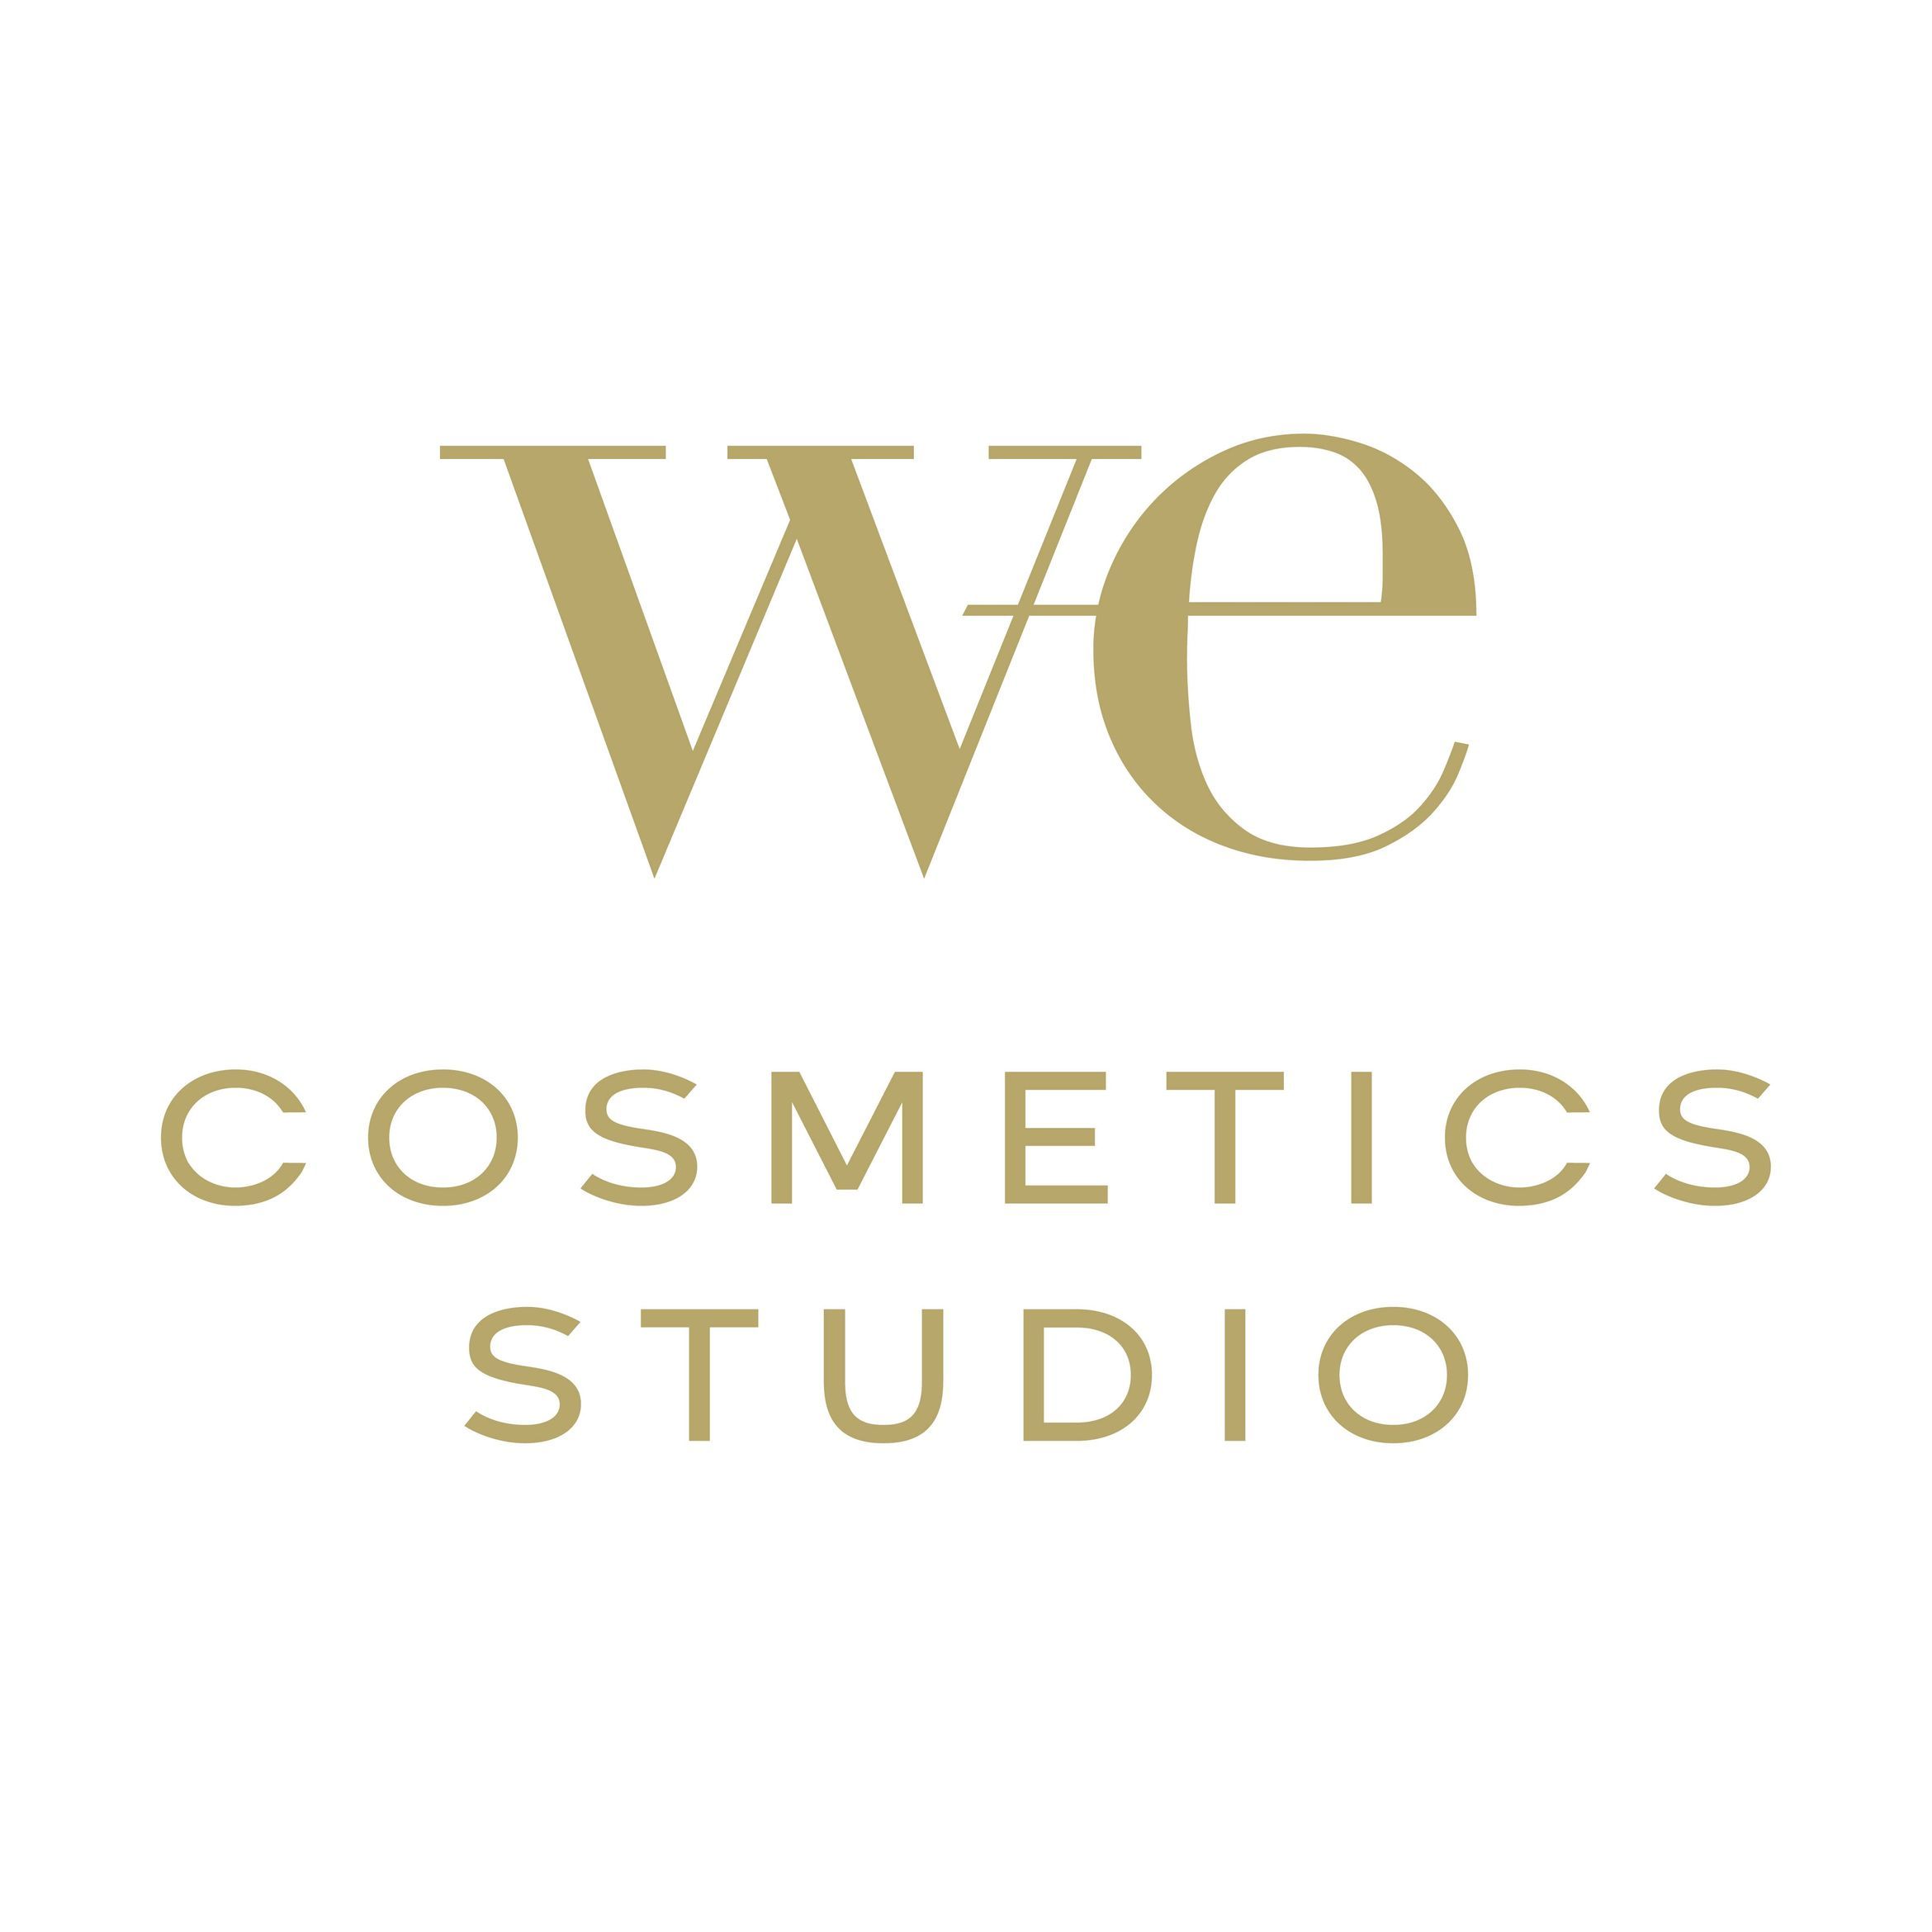 We Cosmetics Studio, 86a Station Road, BS37 4PH, Bristol